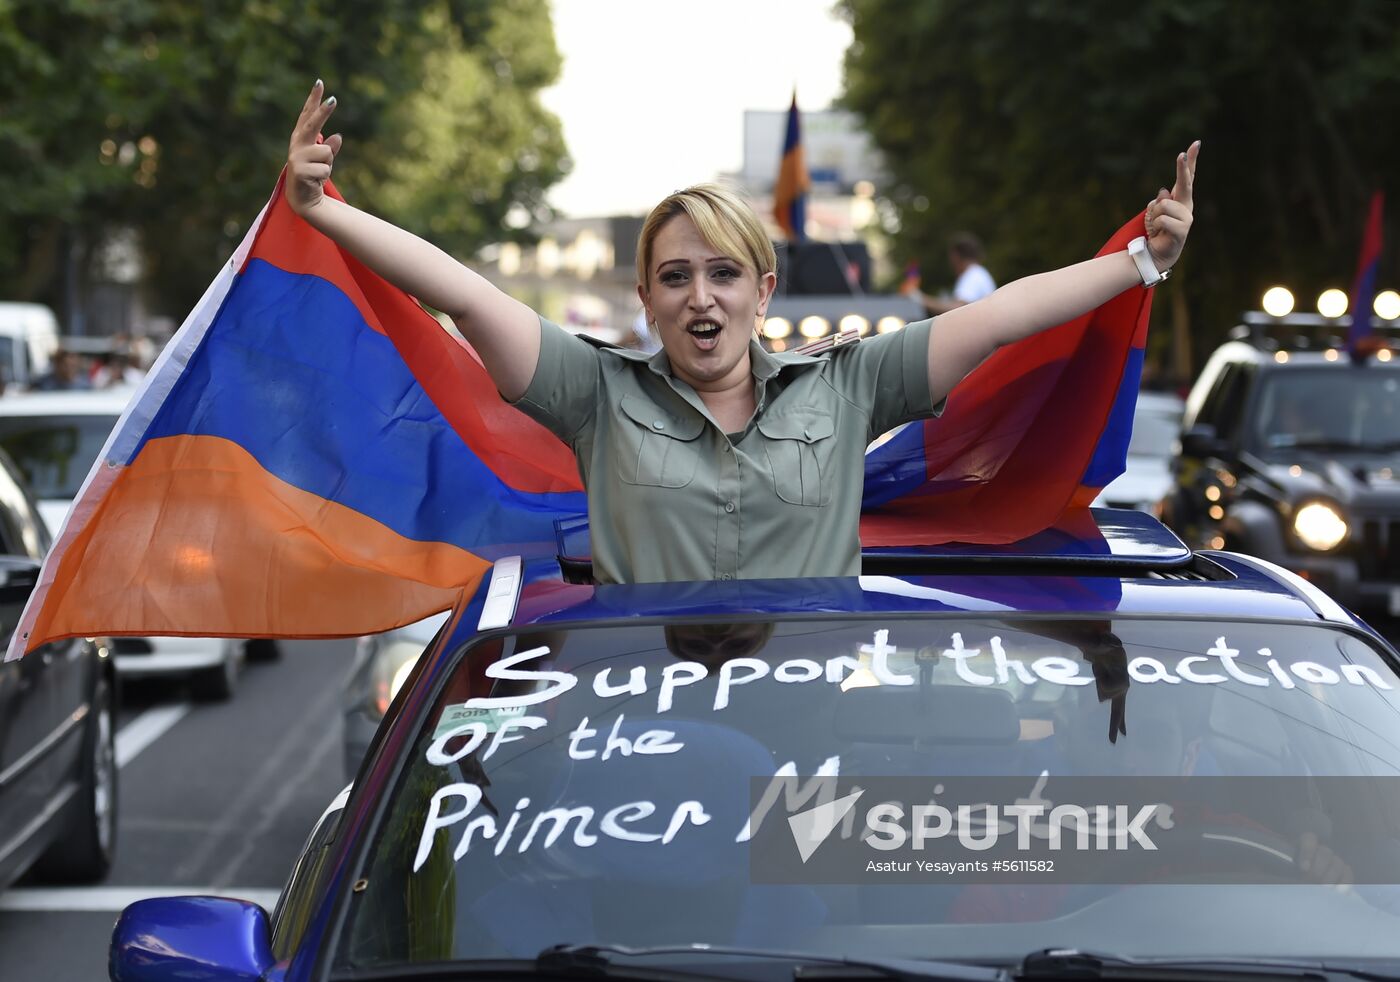 Rally on Nikol Pashinyan's 100 days as prime minister in Yerevan